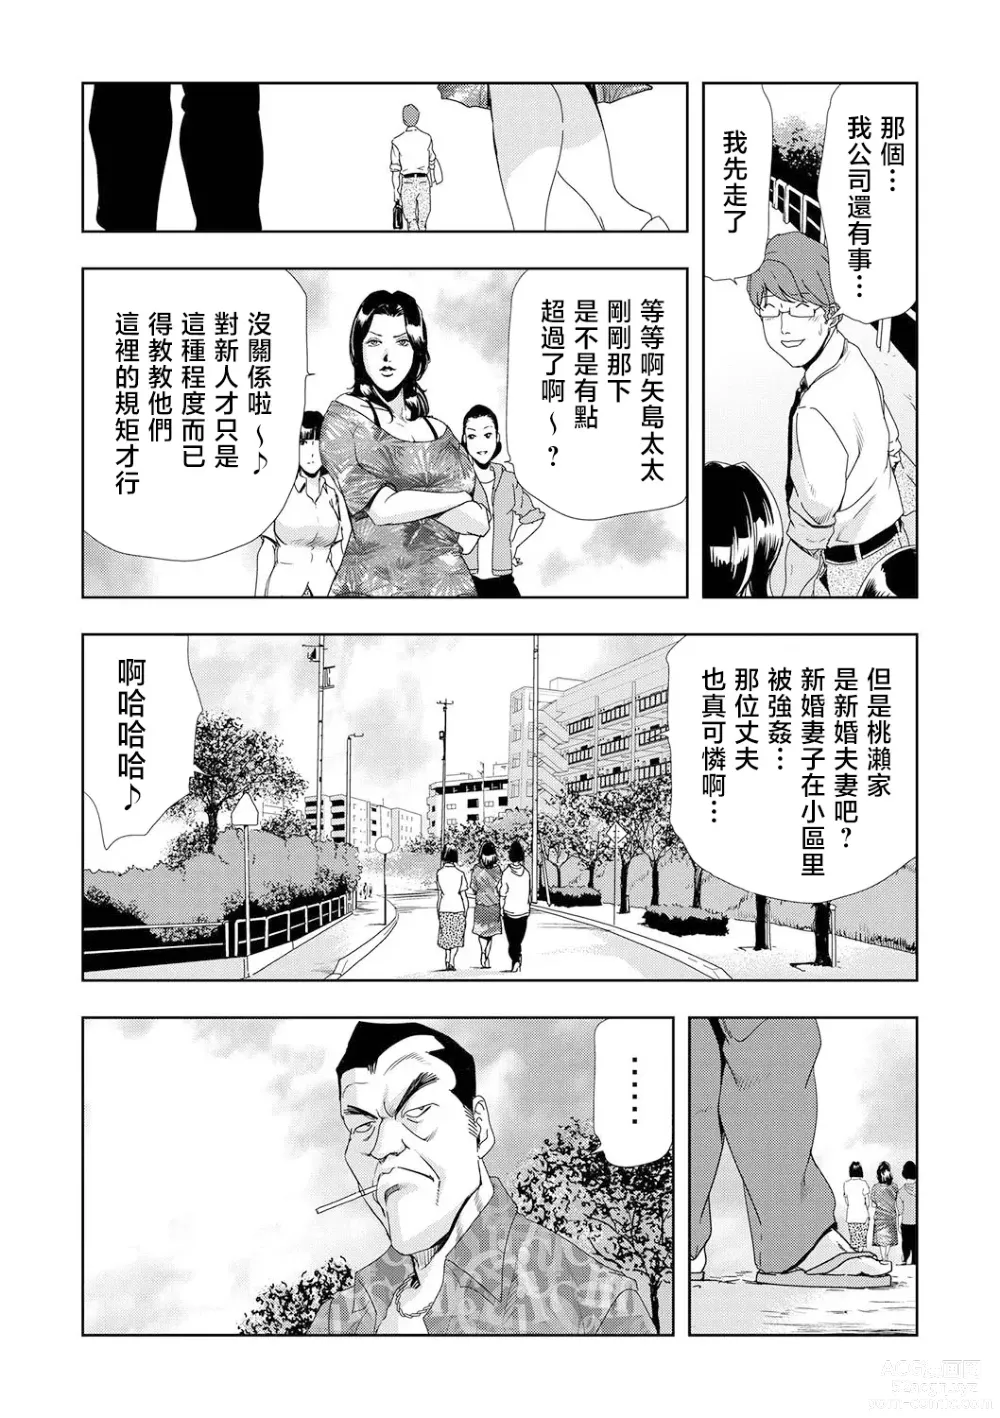 Page 21 of manga Netorare Vol.04